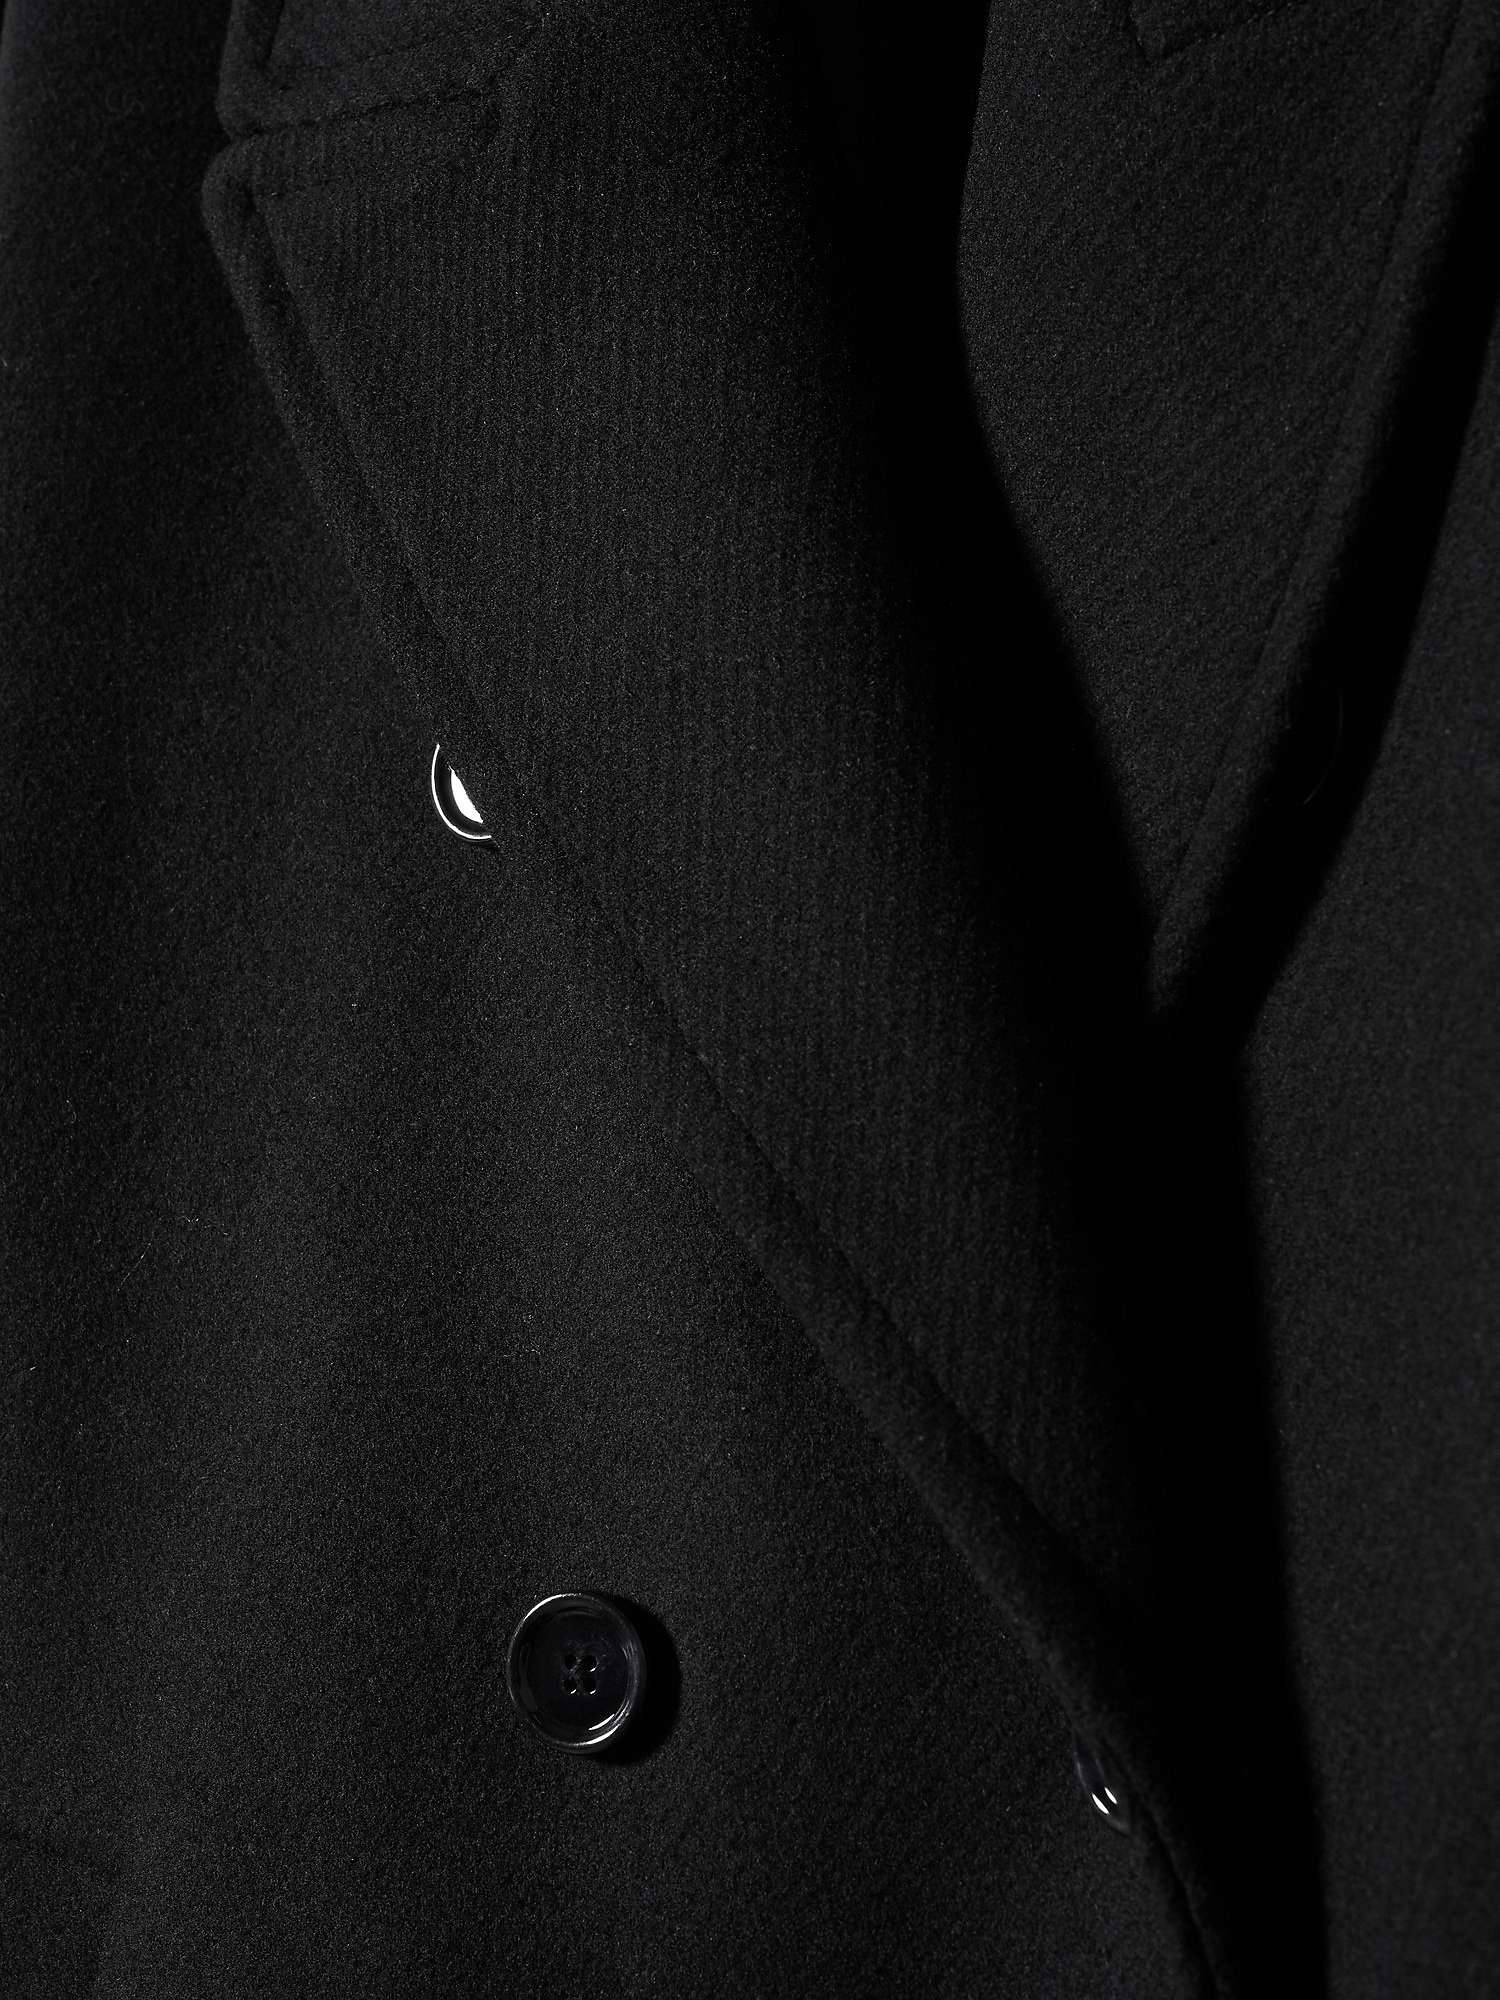 Mango Gauguin Wool Blend Coat, Black at John Lewis & Partners